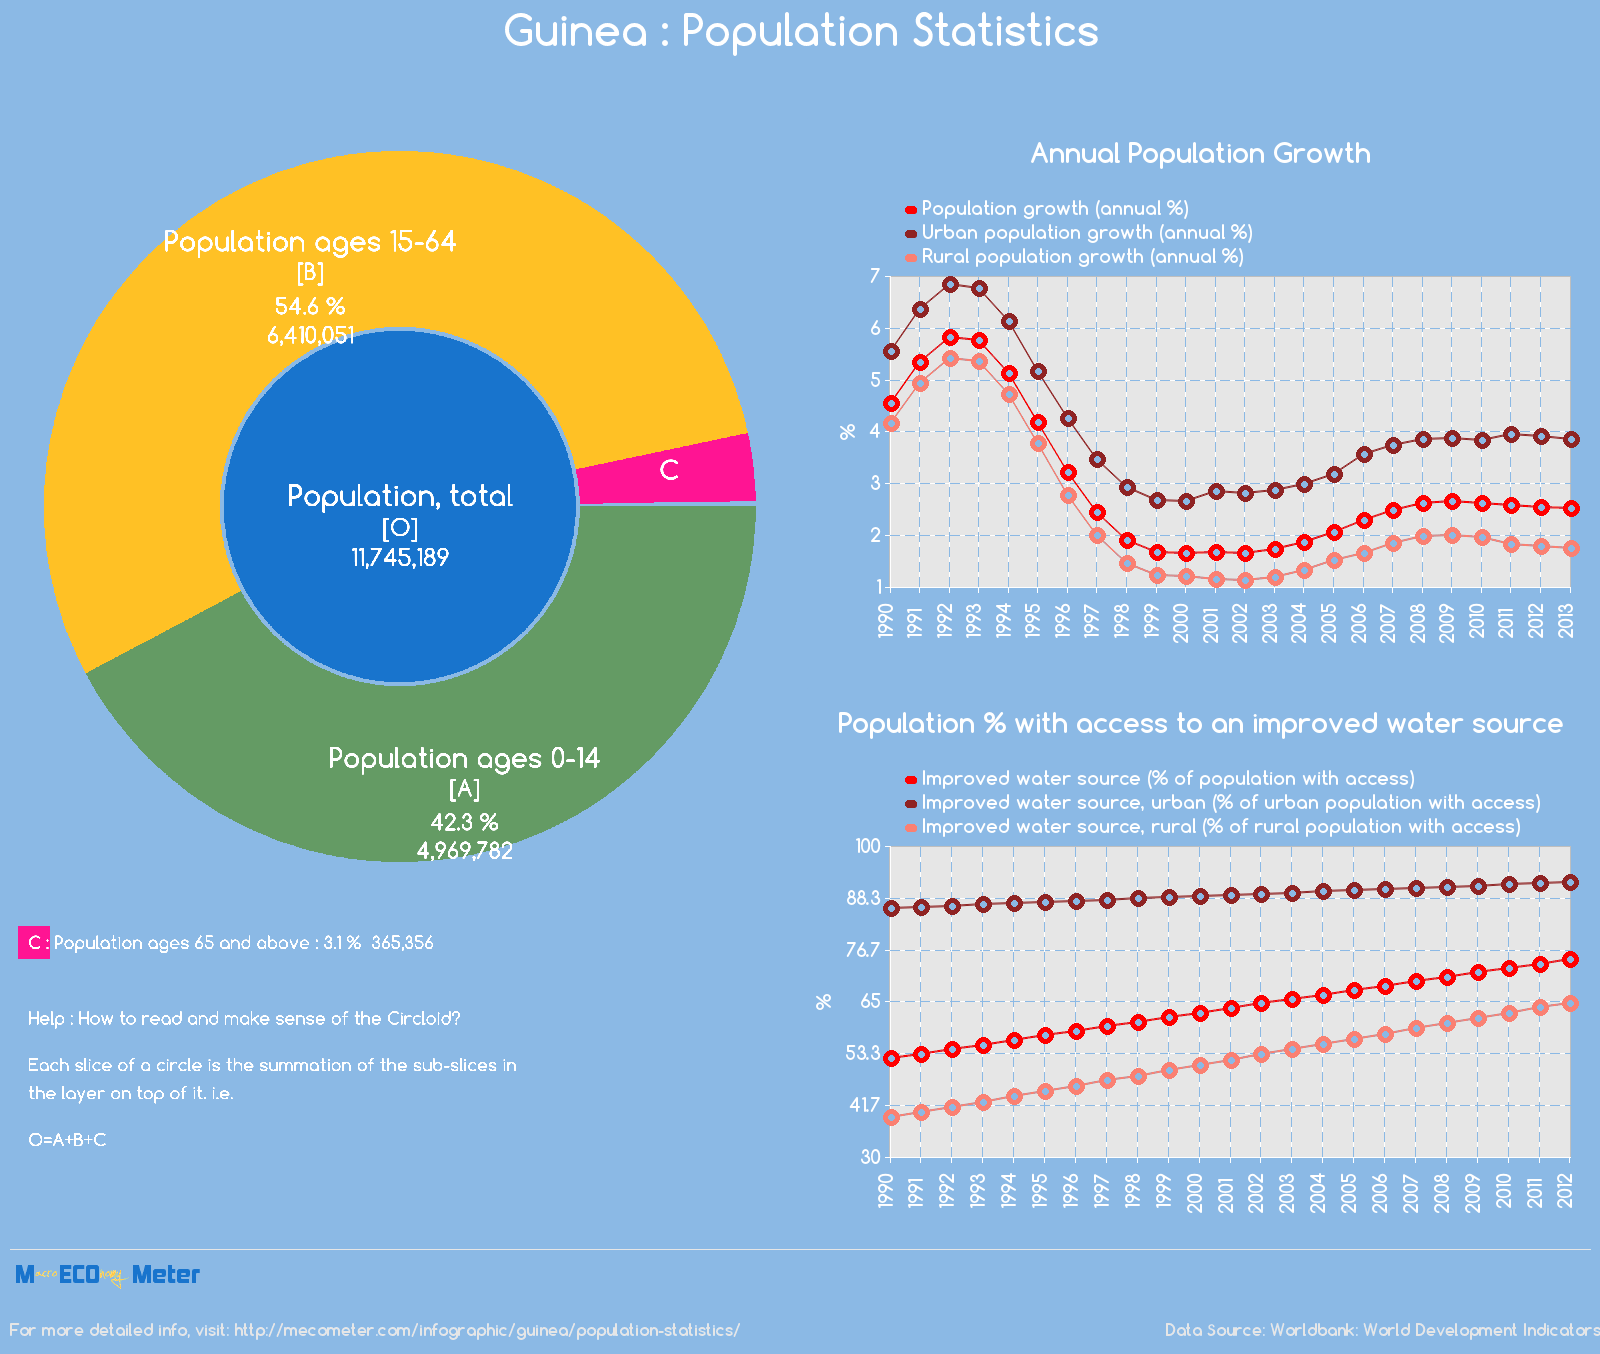 Guinea : Population Statistics